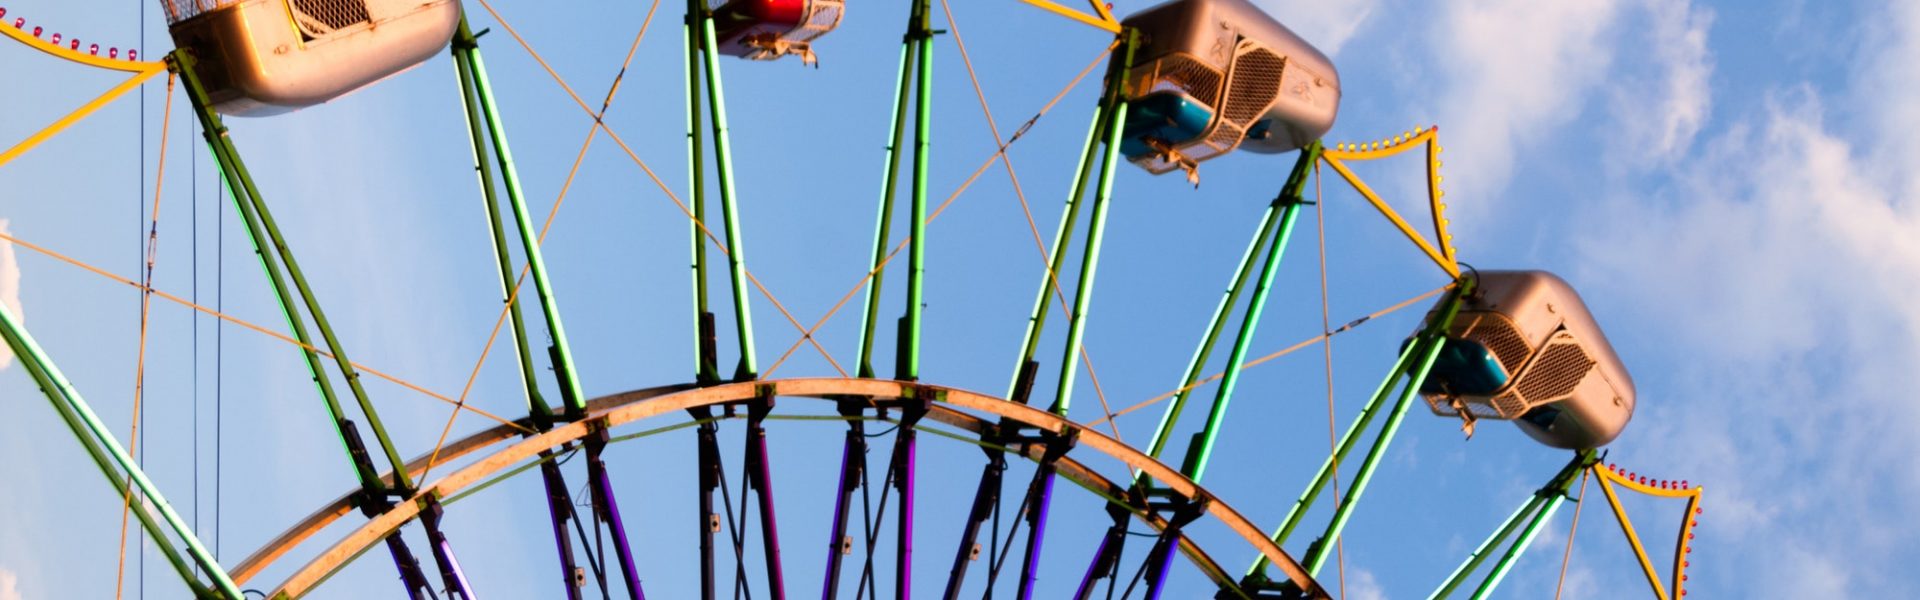 State Fair Carnival Amusment Ride Blue Sky